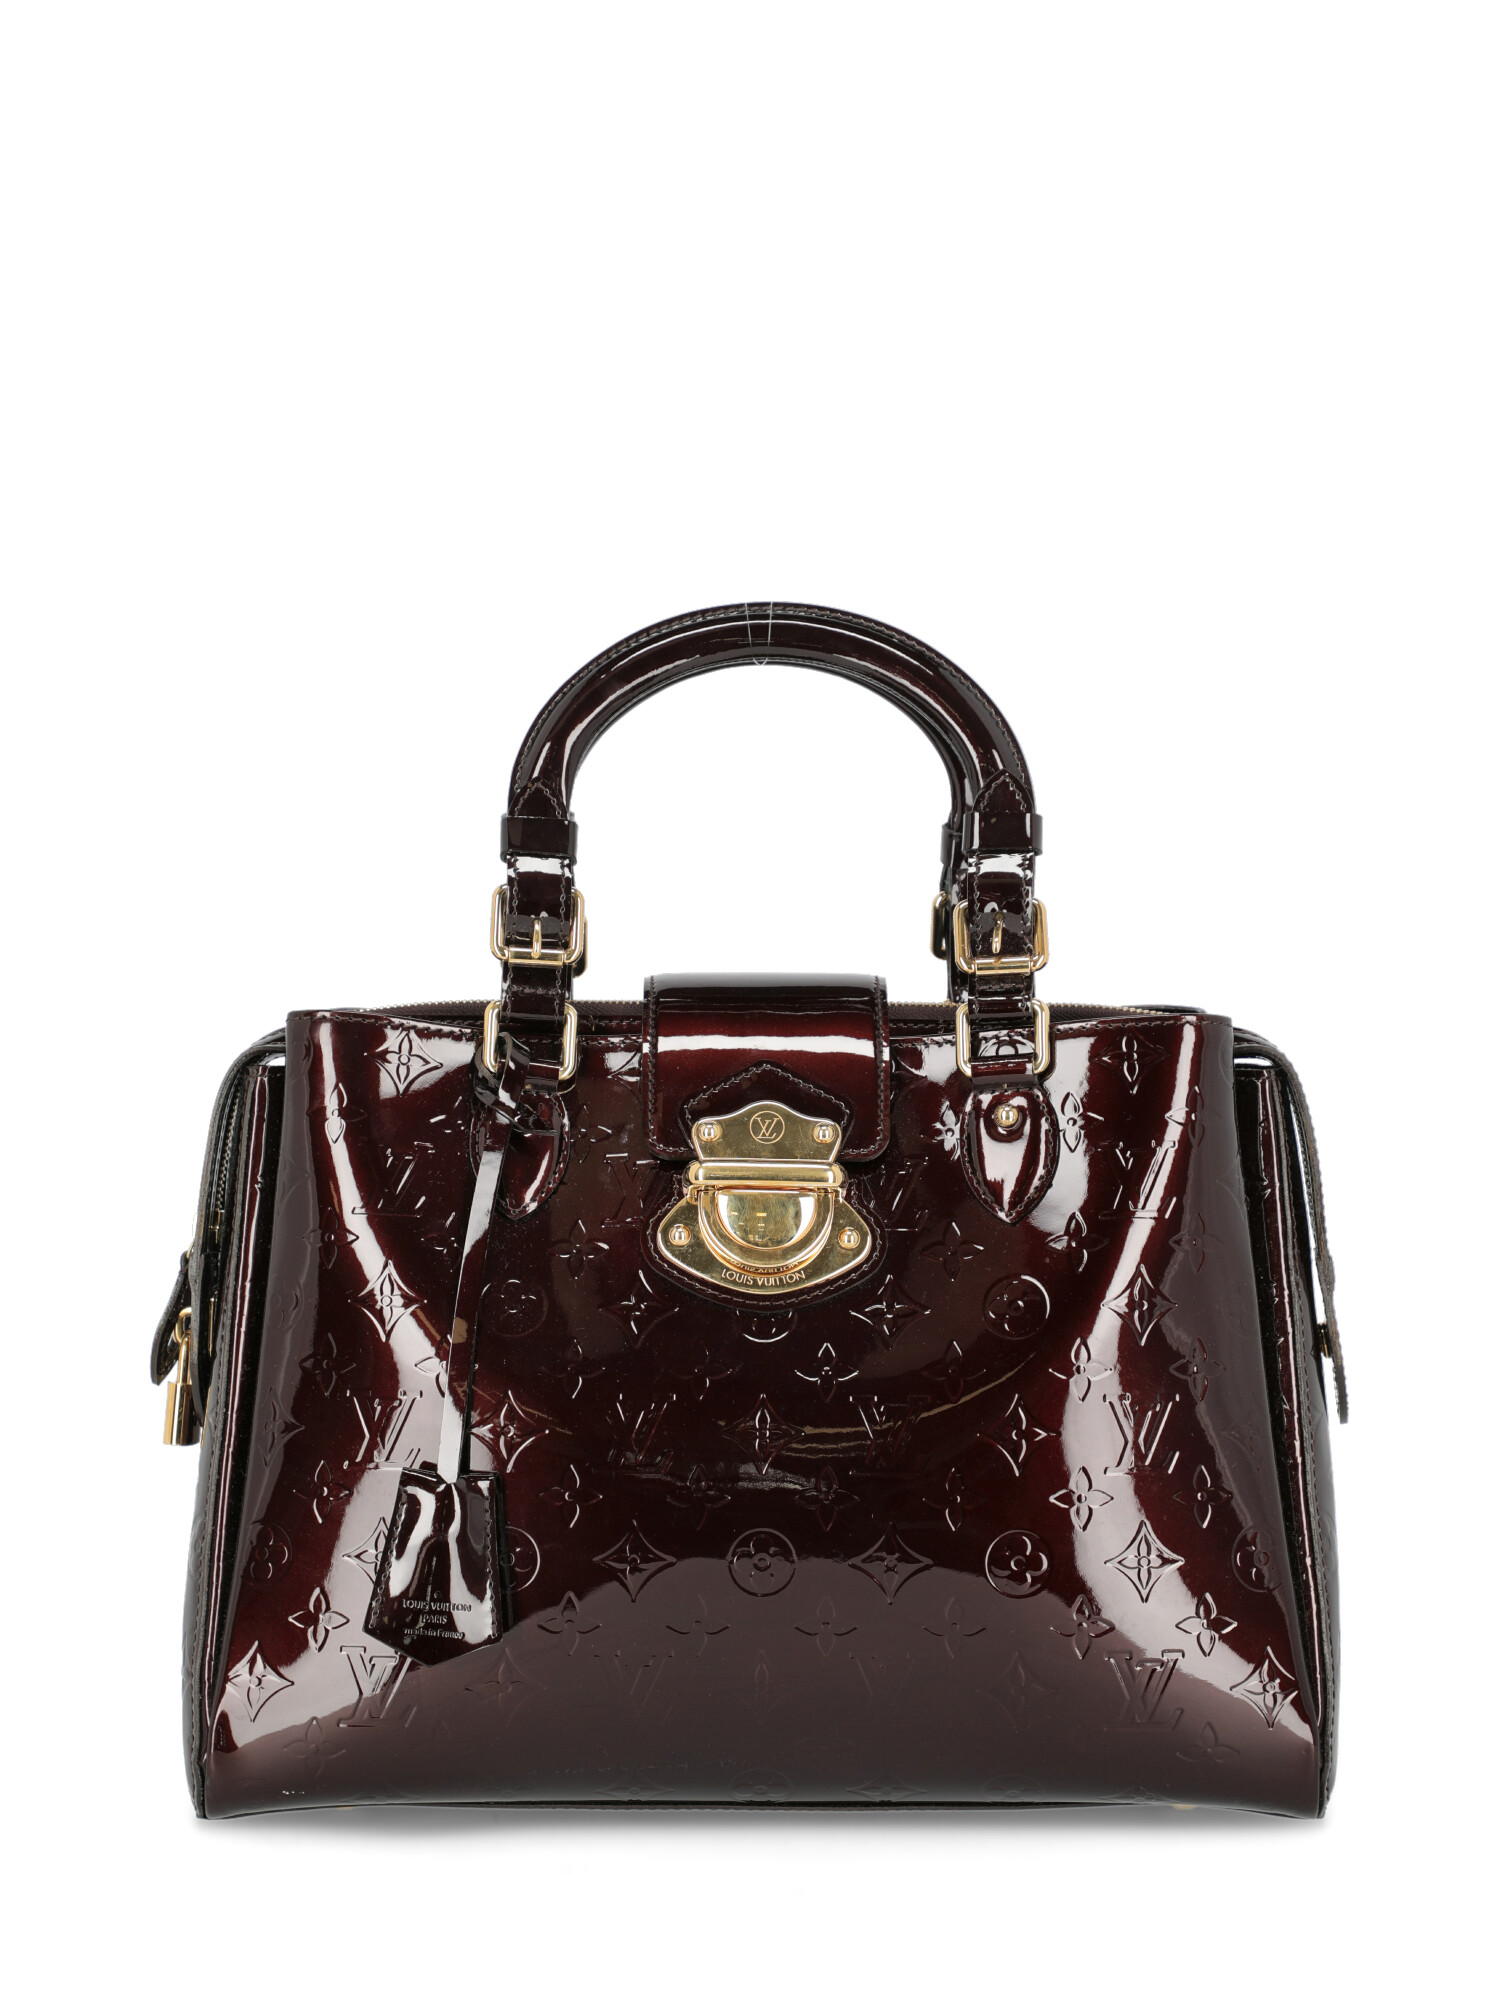 Louis Vuitton Special Price Women Handbags Melrose Avenue Burgundy | eBay